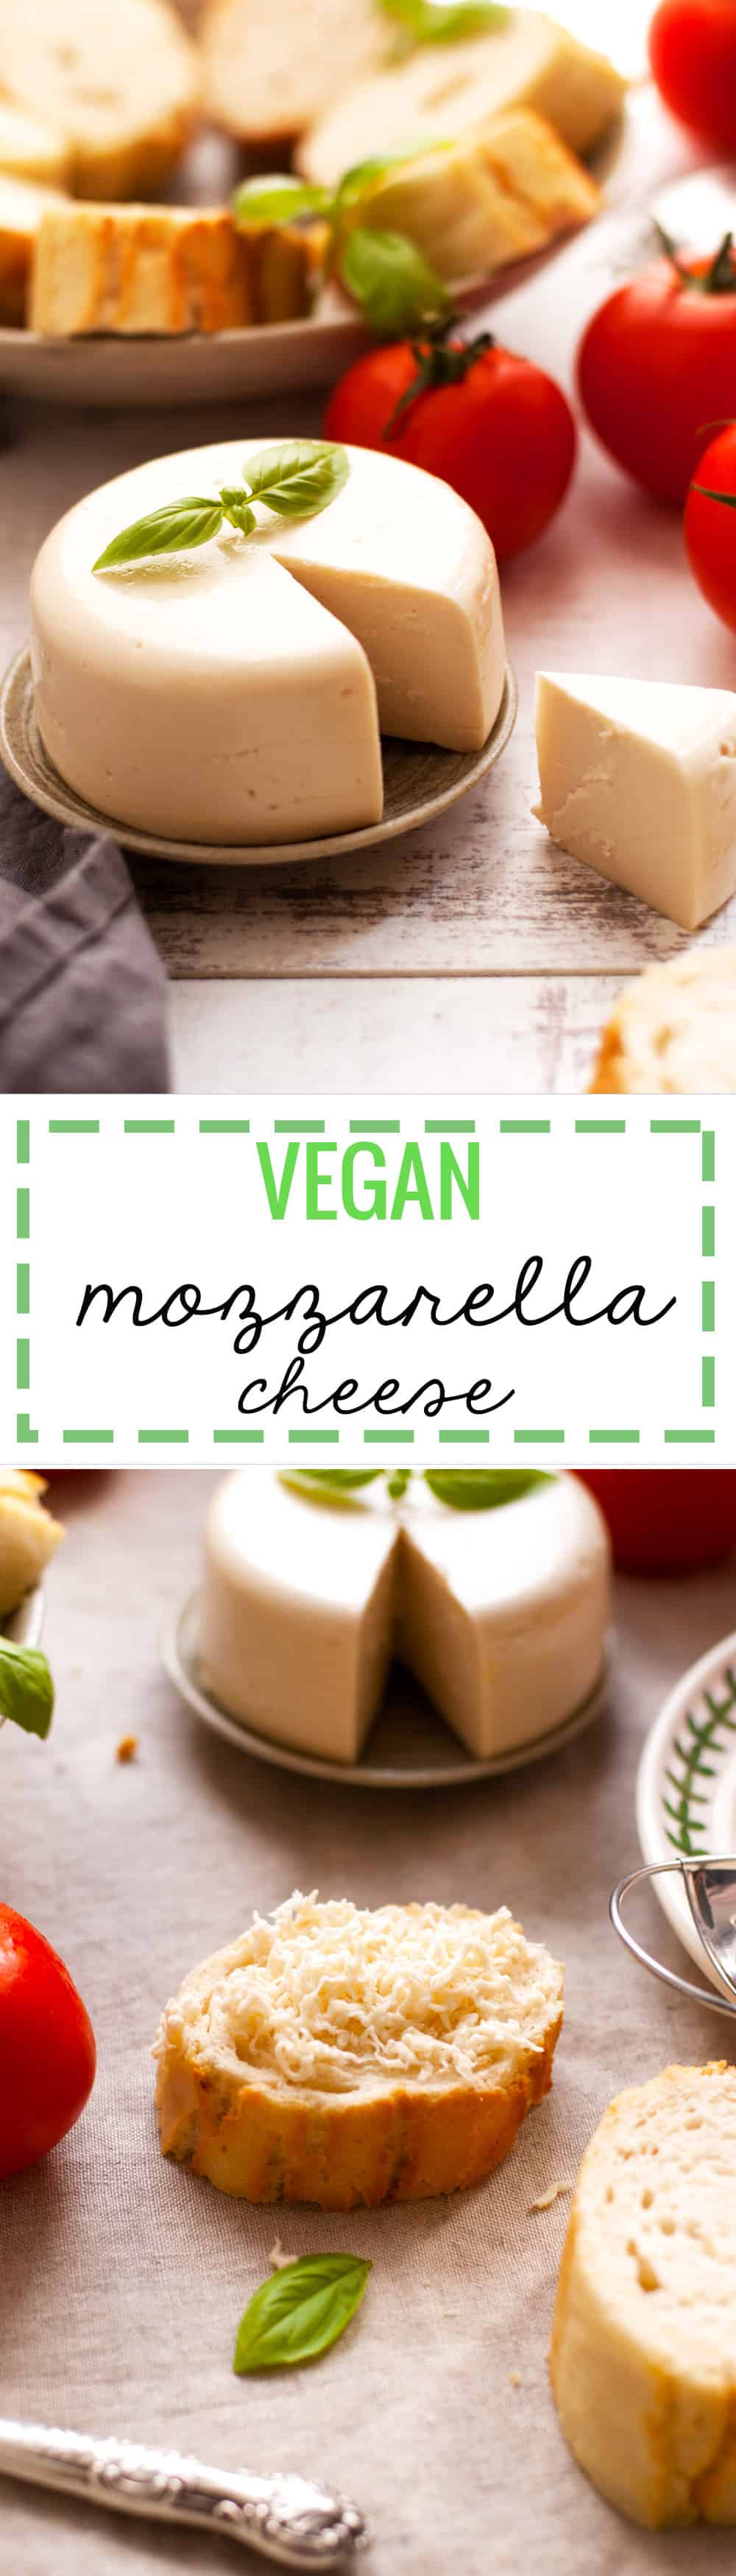 Vegan-Mozzarella-Cheese-Pinterest-Image